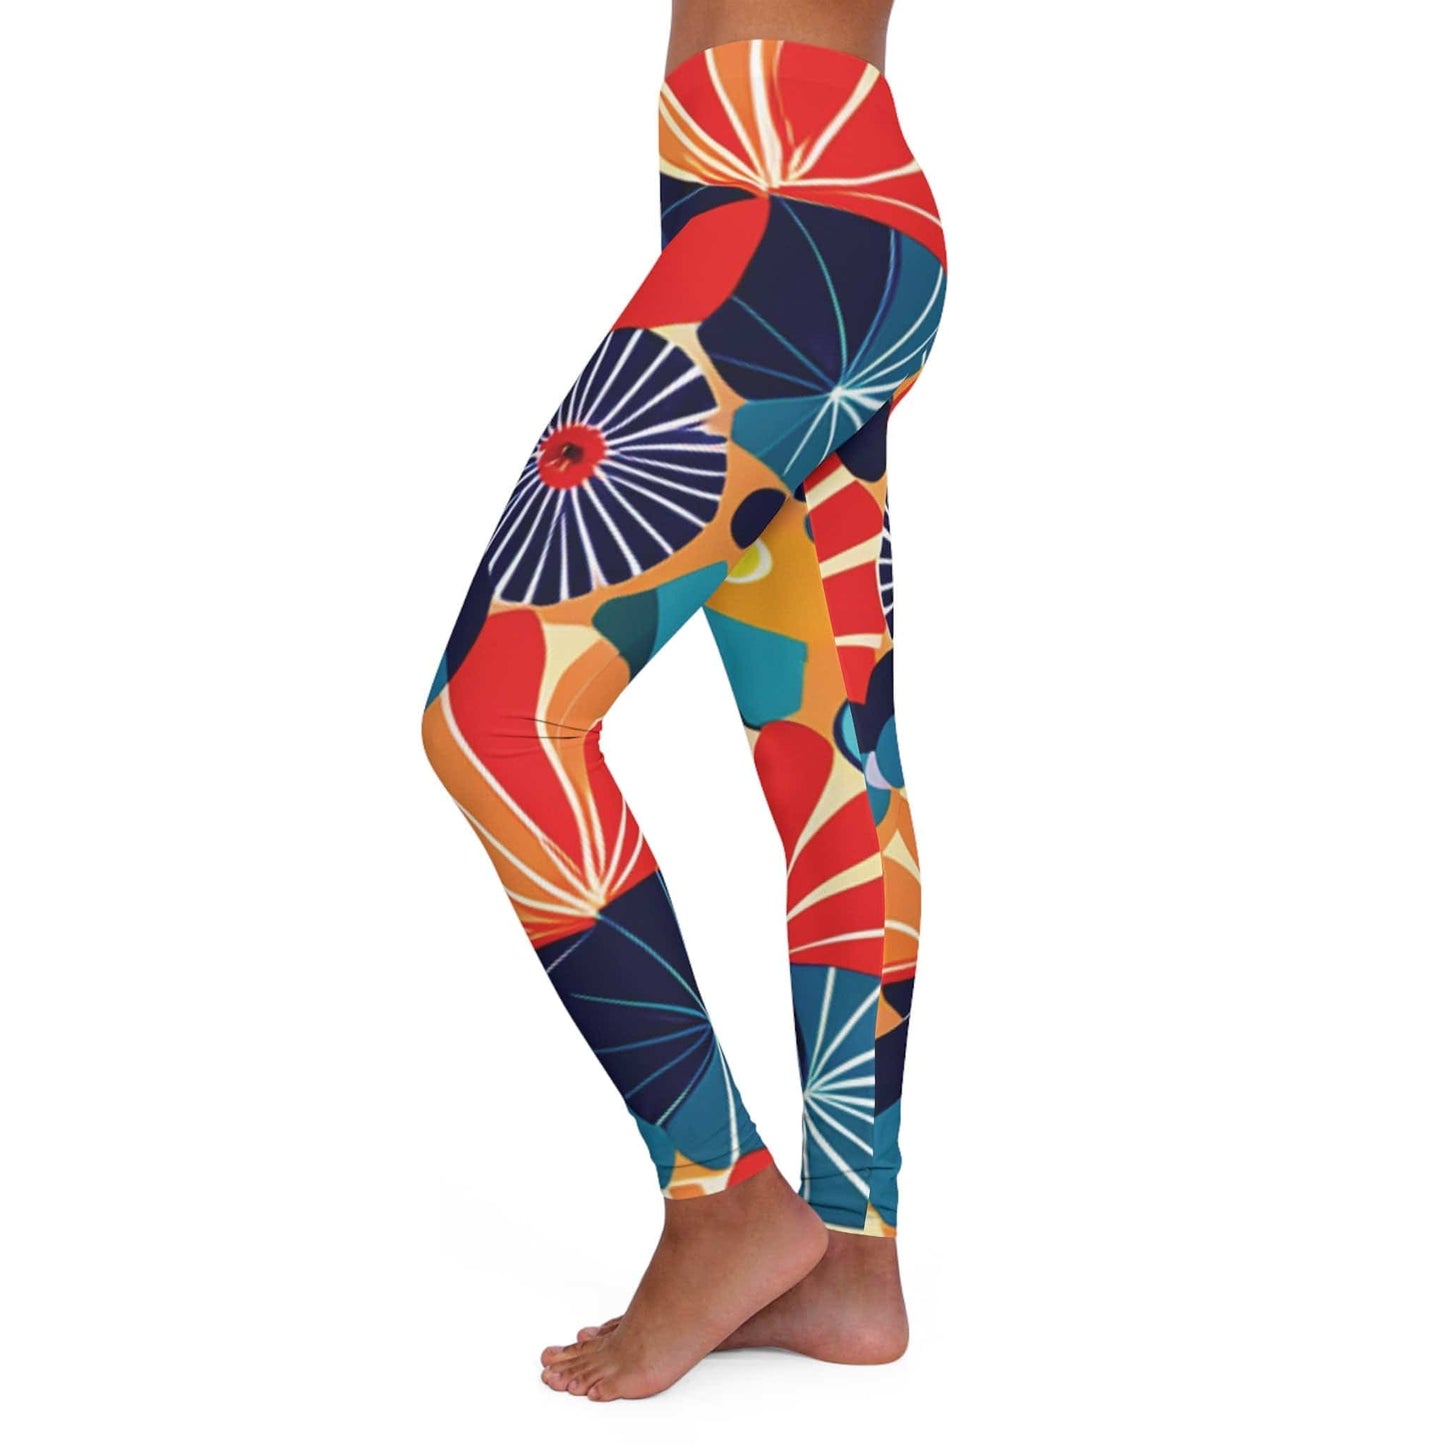 Kate McEnroe New York Retro Geometric Pattern Leggings - Stretchy Skinny Fit with Bold Mid-Century Colors Leggings